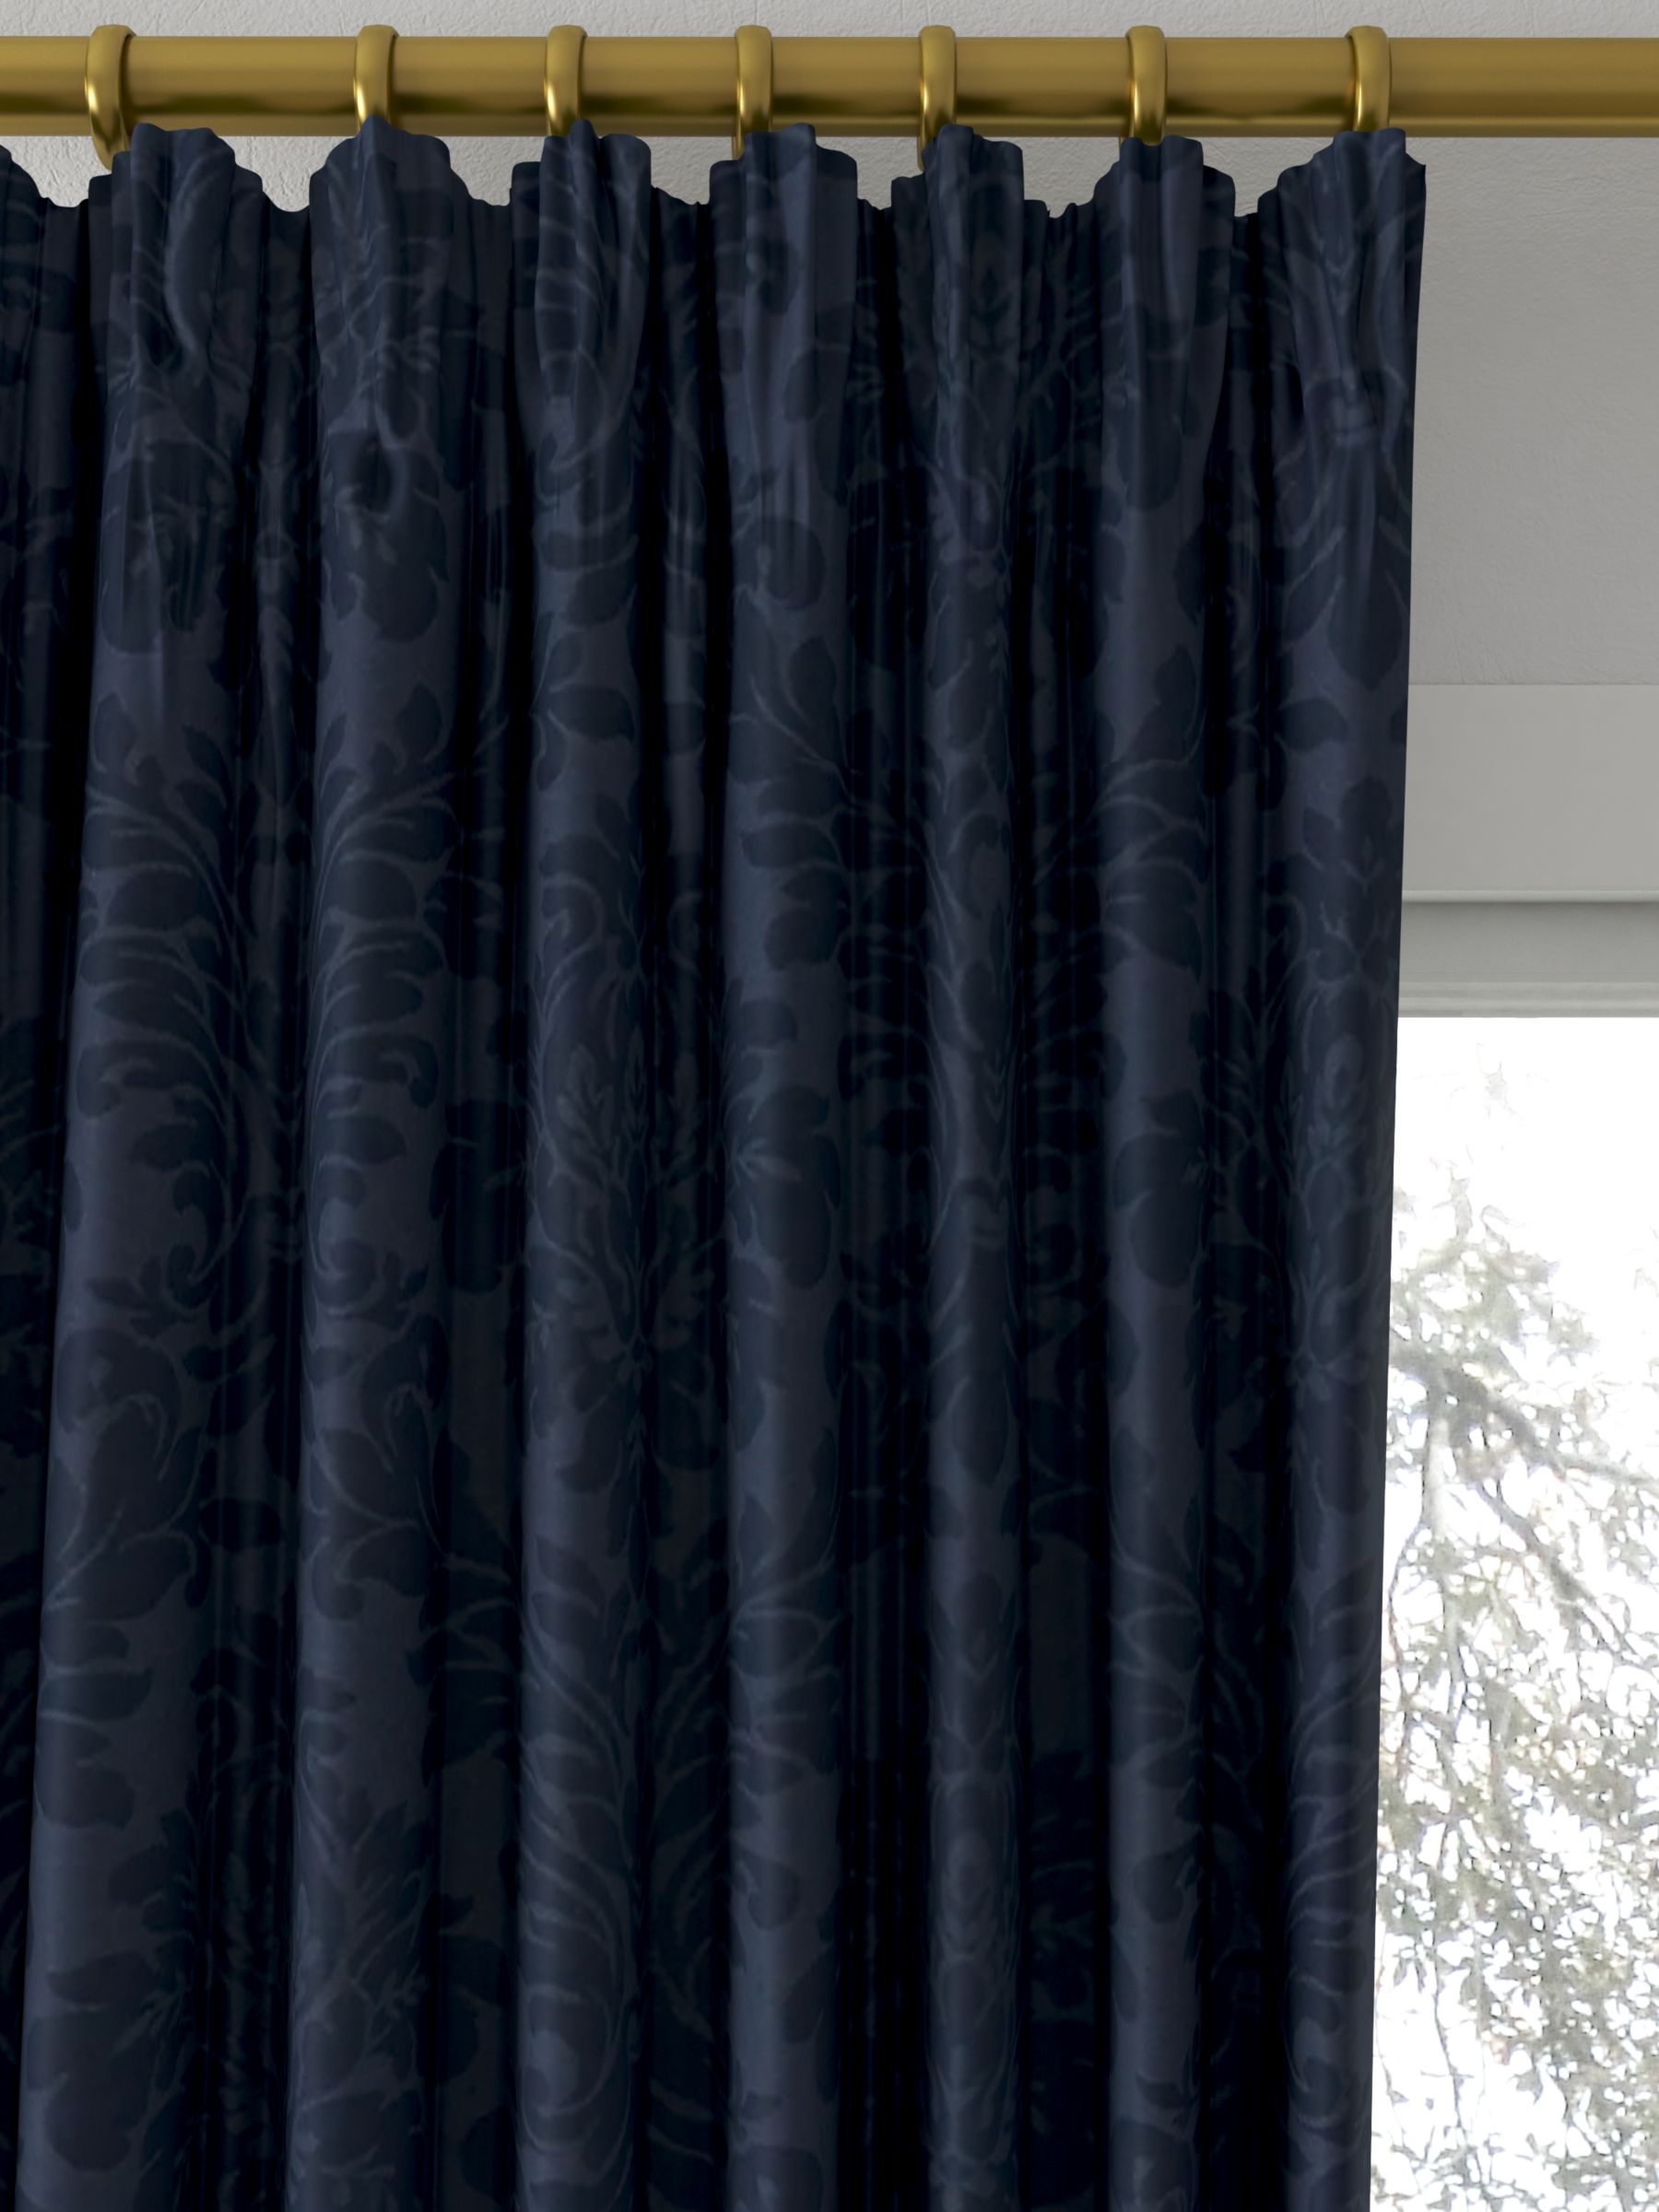 Sanderson Lymington Damask Made to Measure Curtains, Indigo